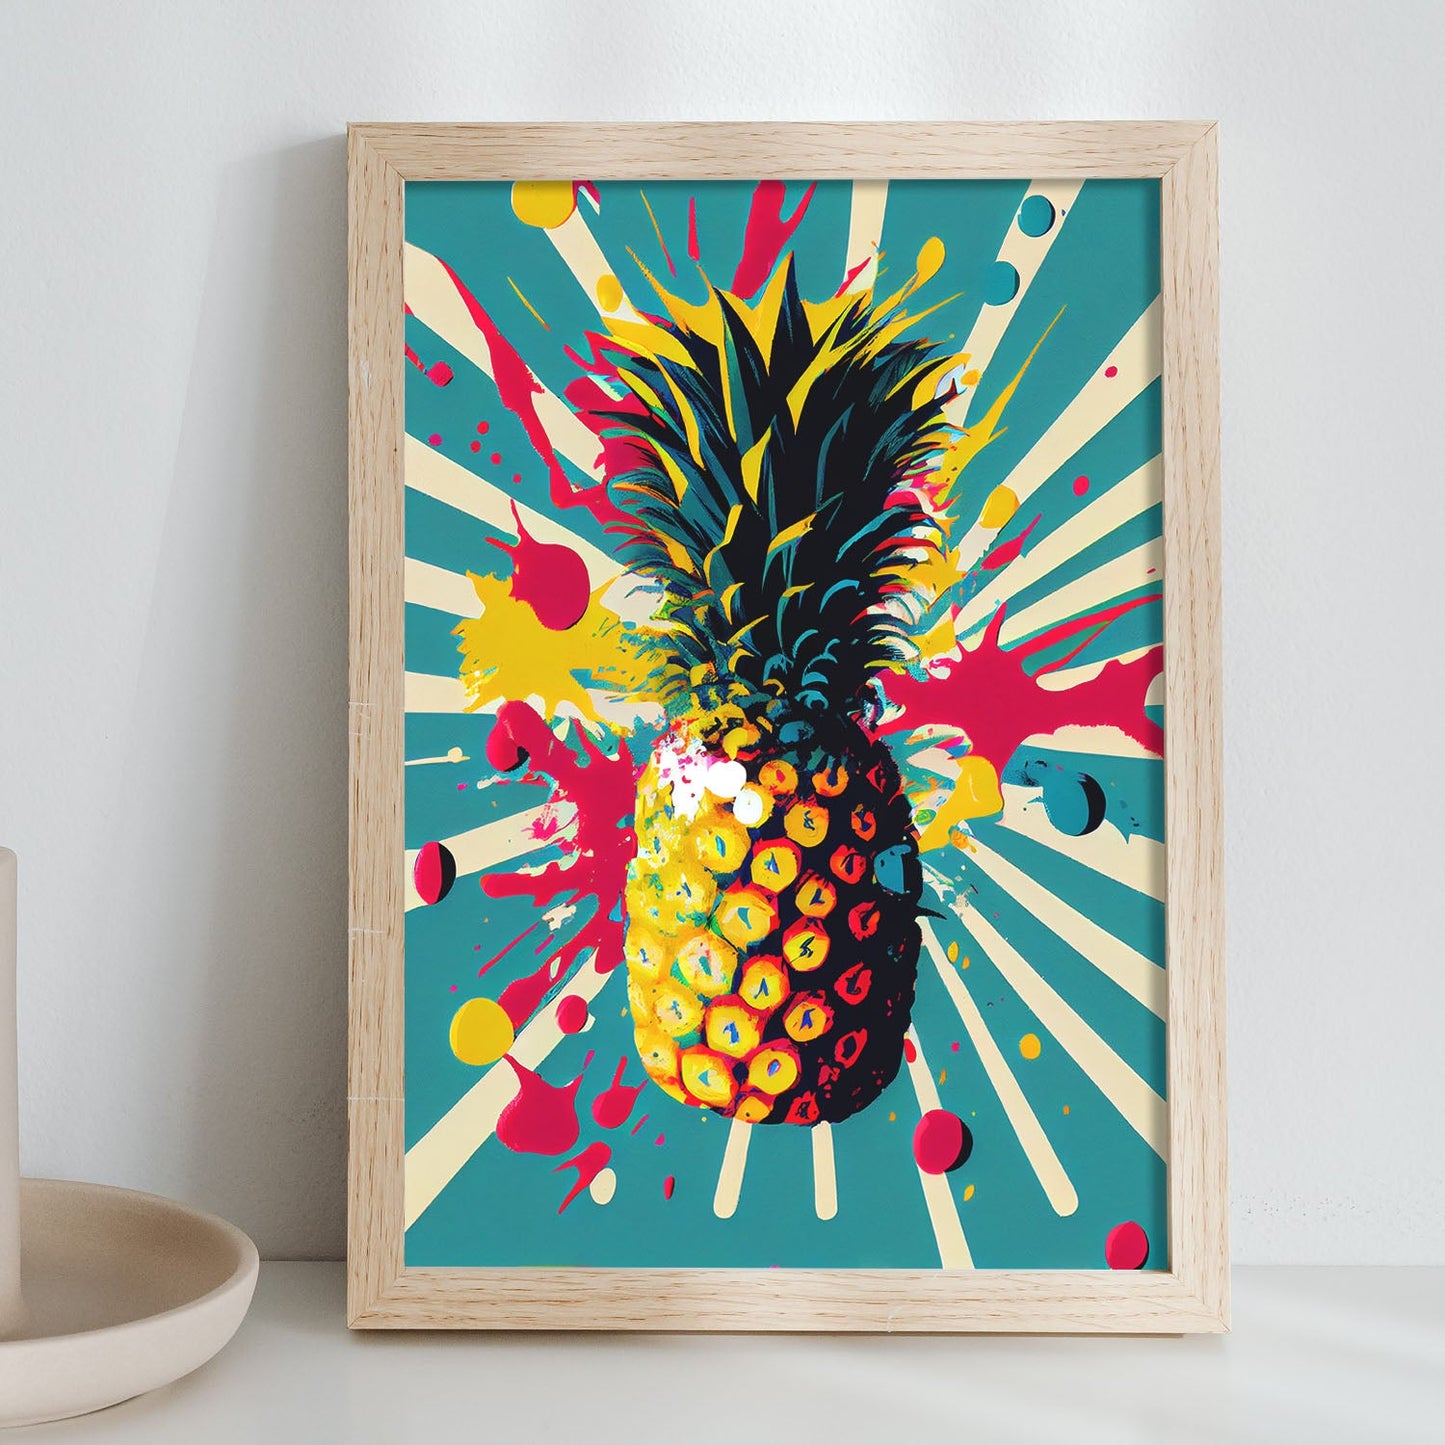 Nacnic Pineapple Pop Art_1. Aesthetic Wall Art Prints for Bedroom or Living Room Design.